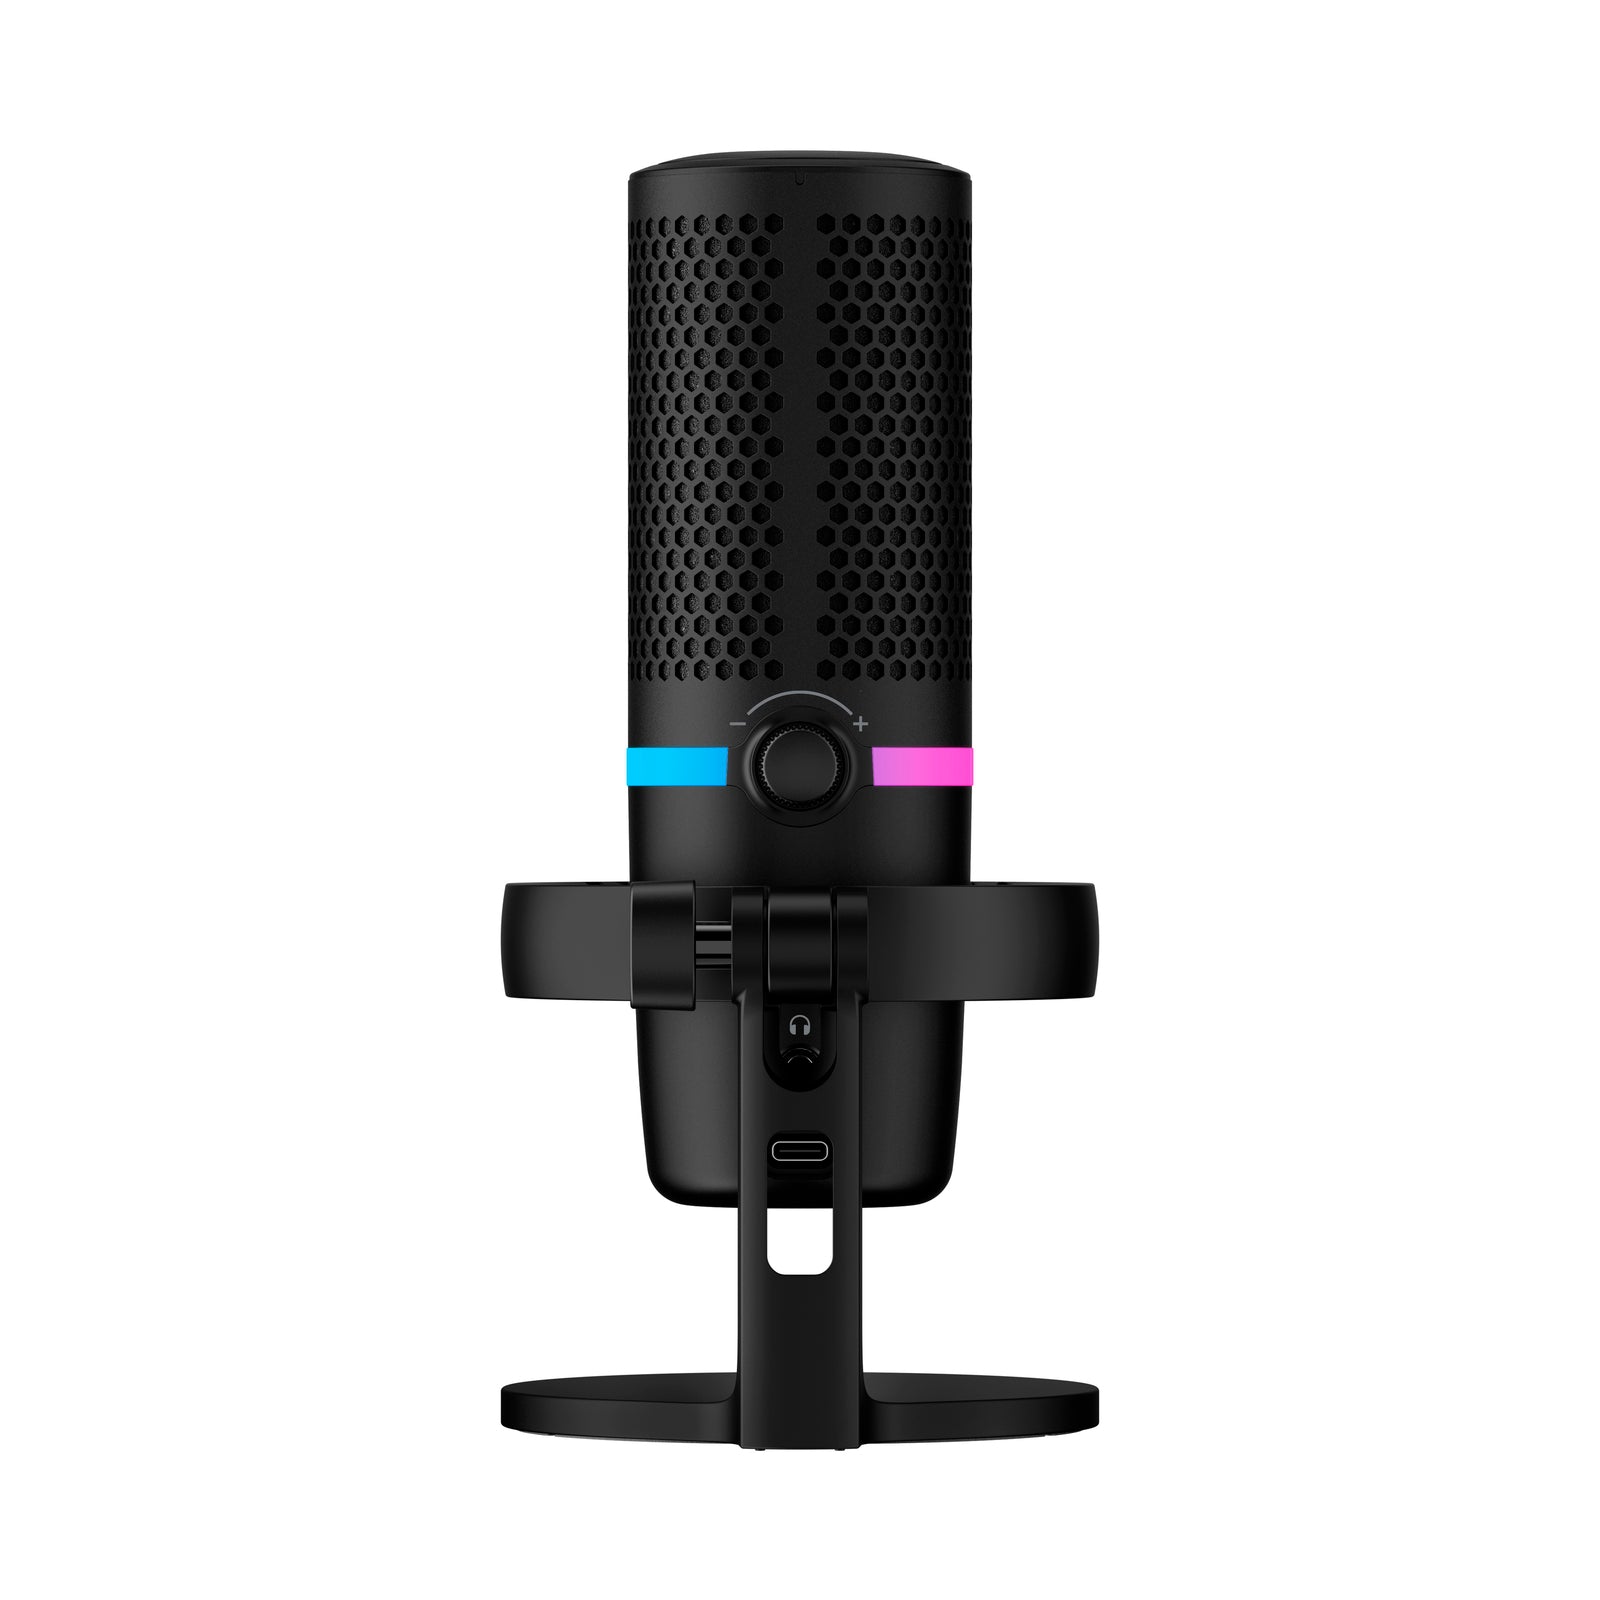 HyperX QuadCast S - USB Microphone (Black-Grey) - RGB Lighting